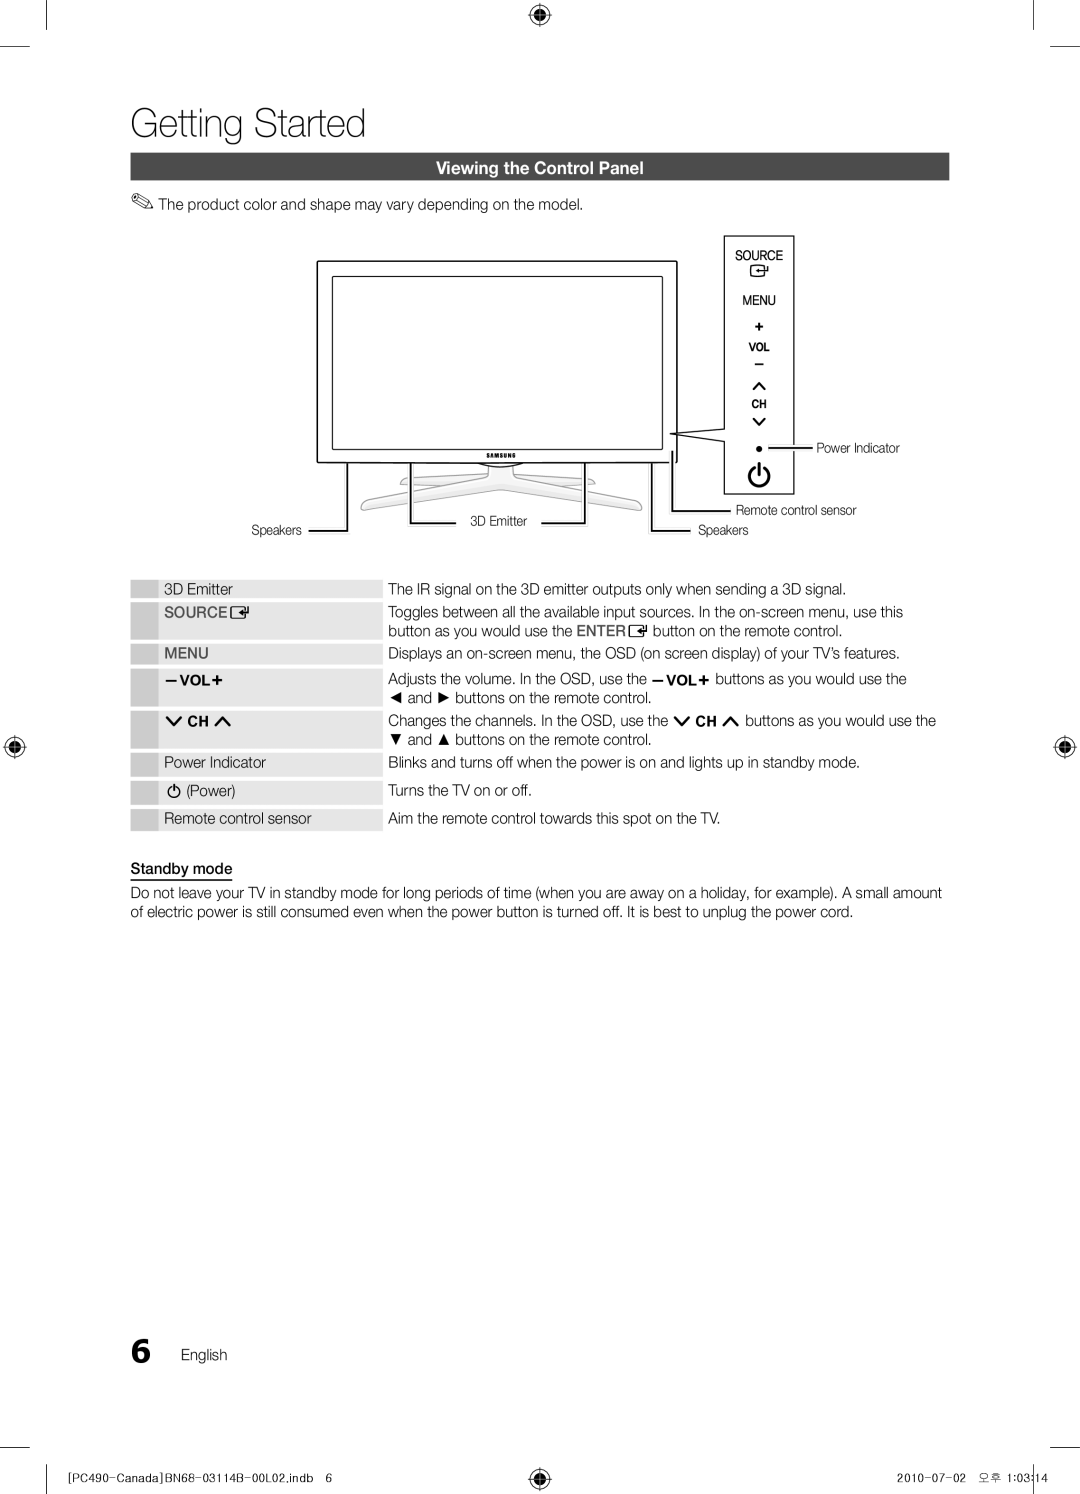 Samsung BN68-03114B-01, PN50C490, Series P4+ 490 user manual Viewing the Control Panel, Source E, Menu, Getting Started 